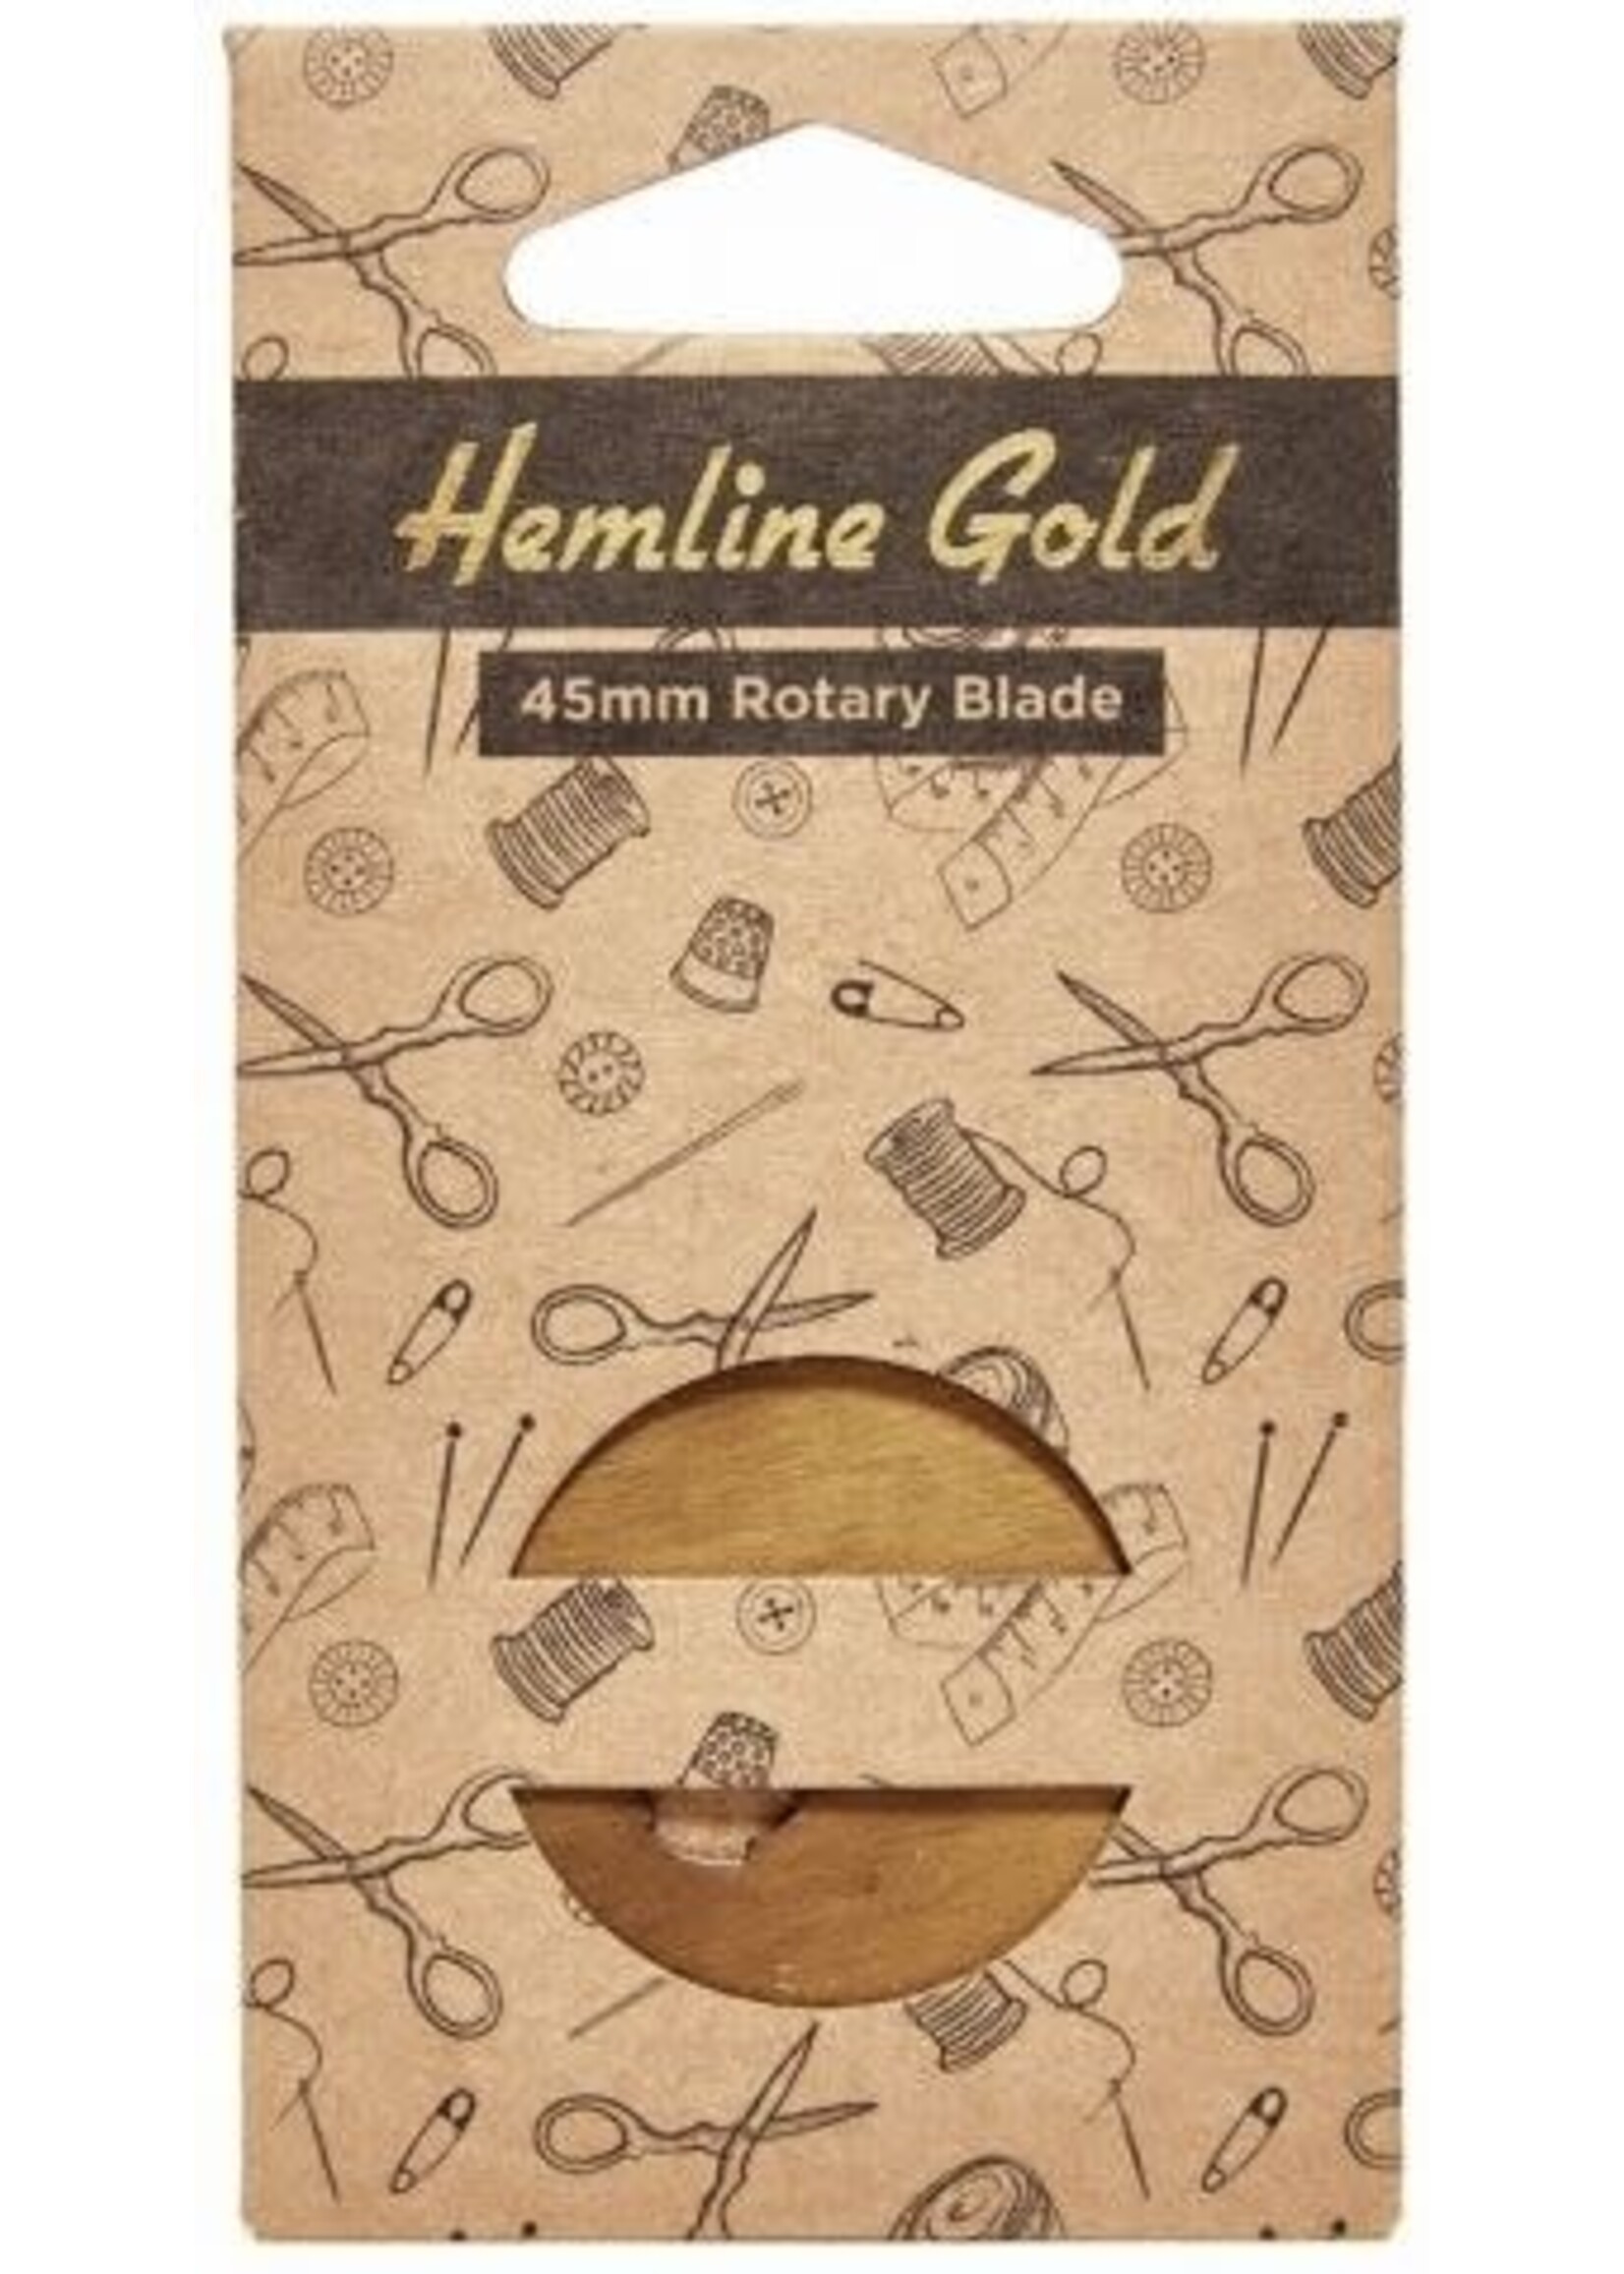 Hemline Gold Hemline Gold 45mm Rotary Blade Replacement